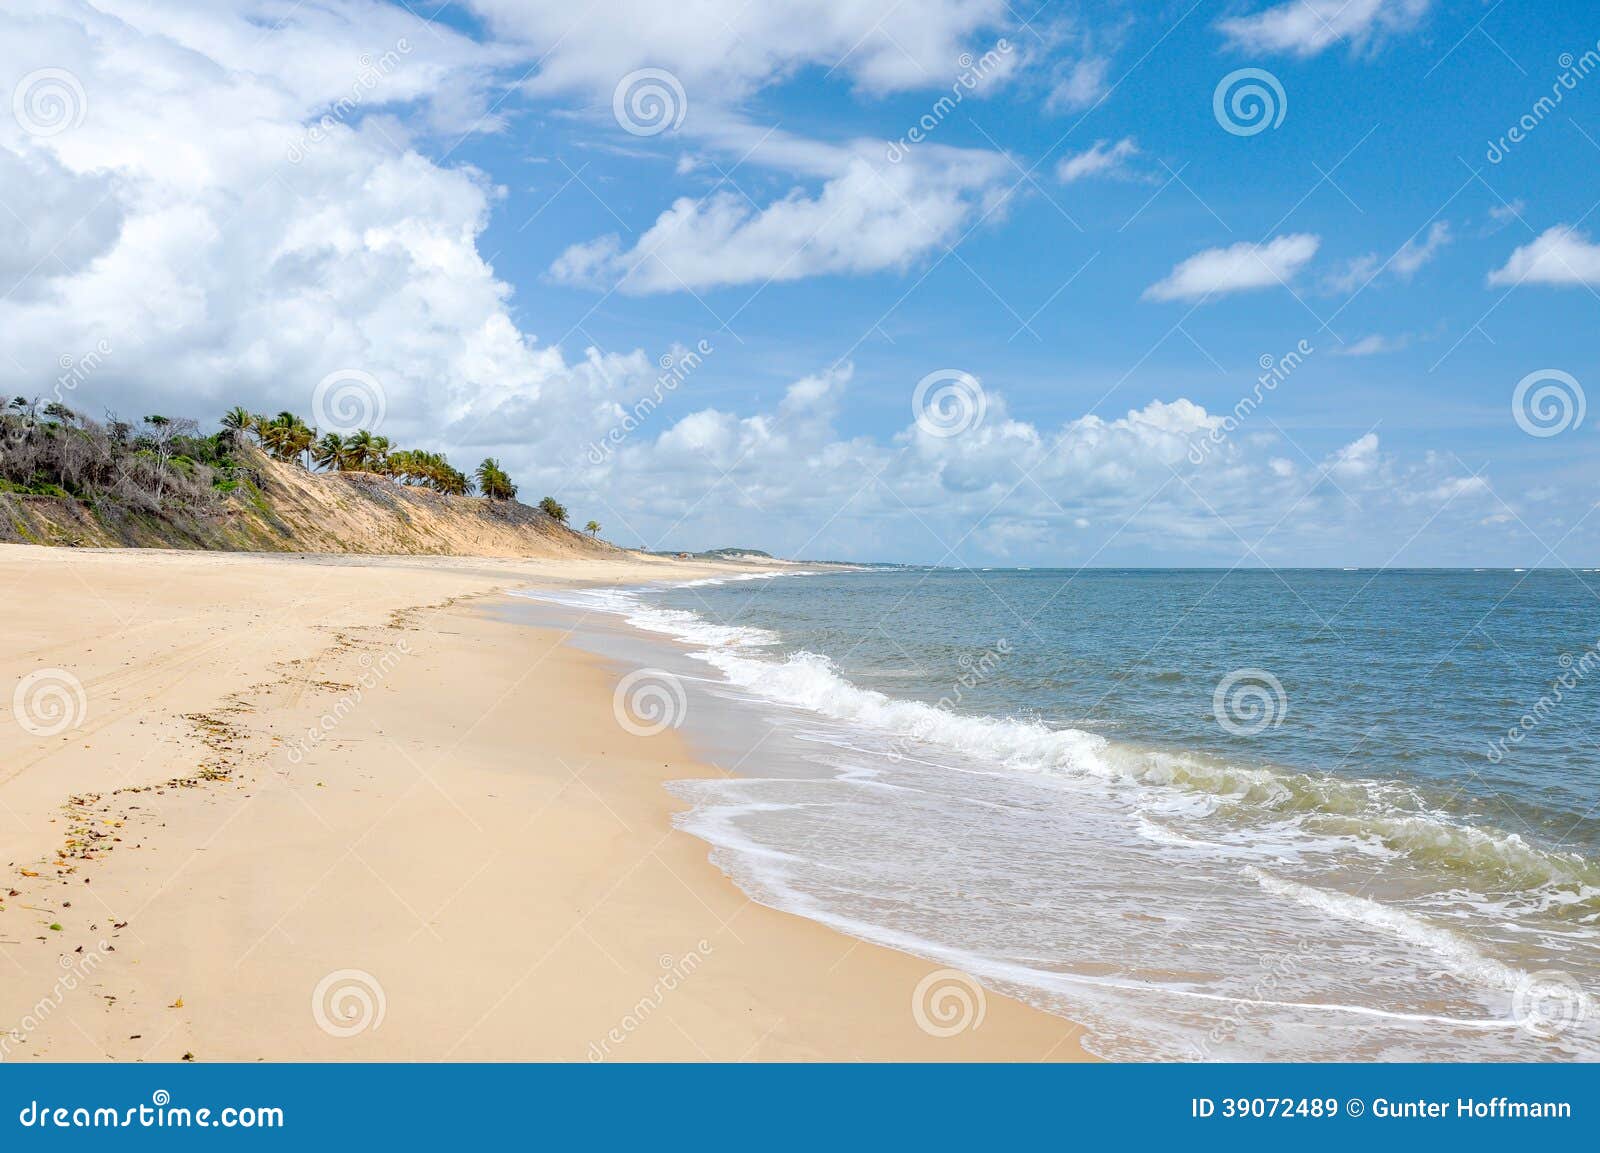 beach of pipa, natal (brazil)